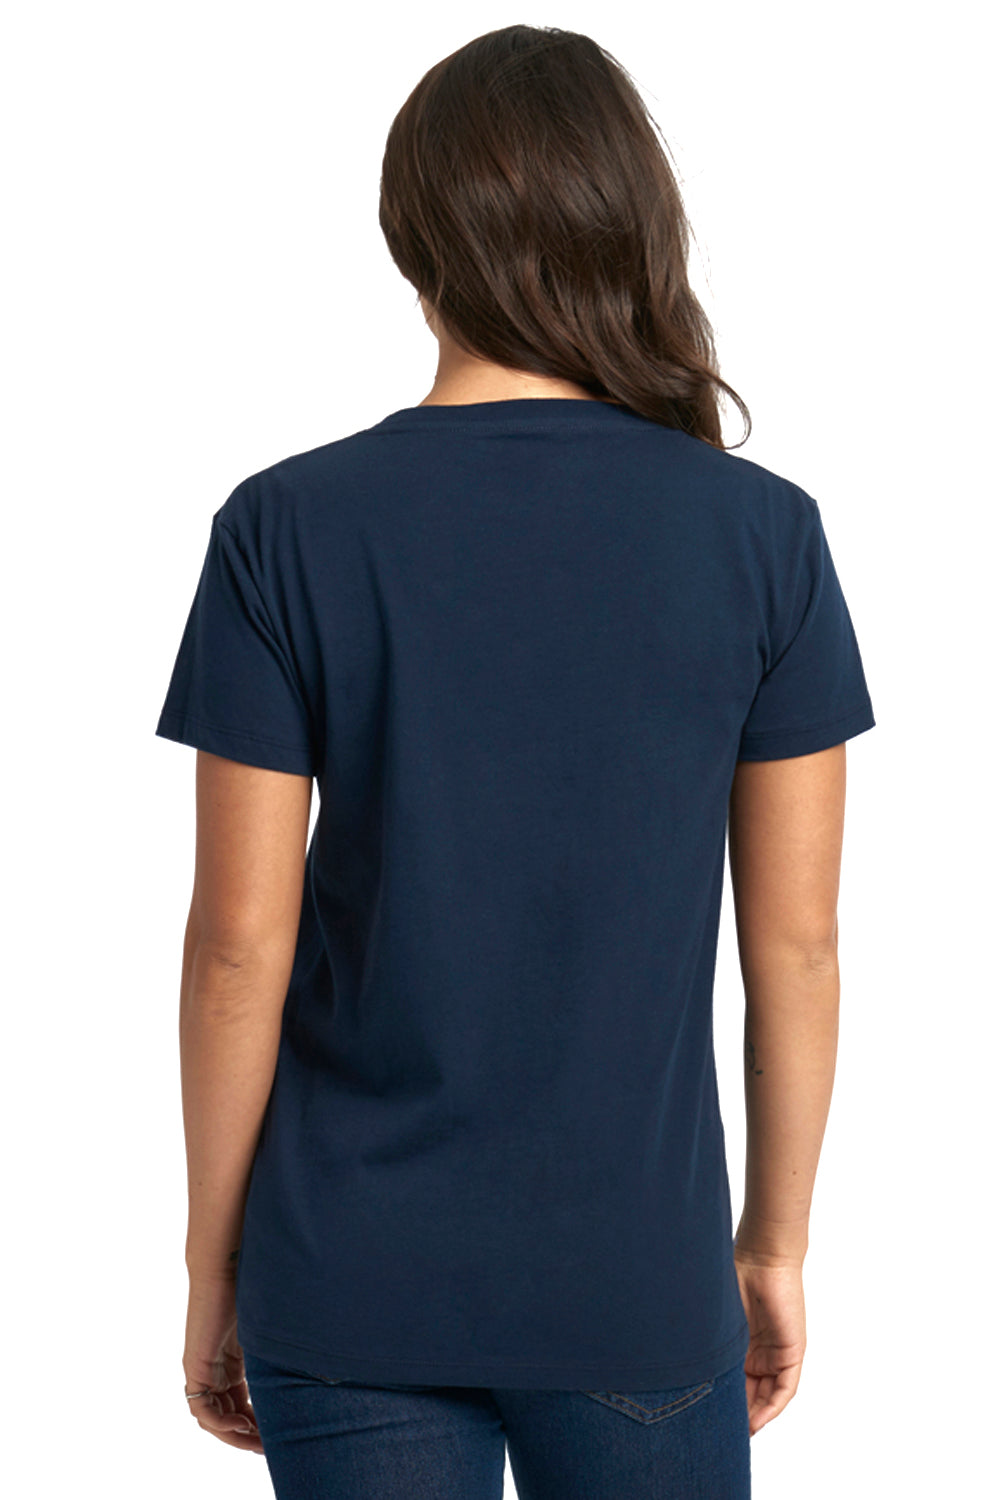 Next Level 3940 Womens Relaxed Short Sleeve V-Neck T-Shirt Navy Blue Back